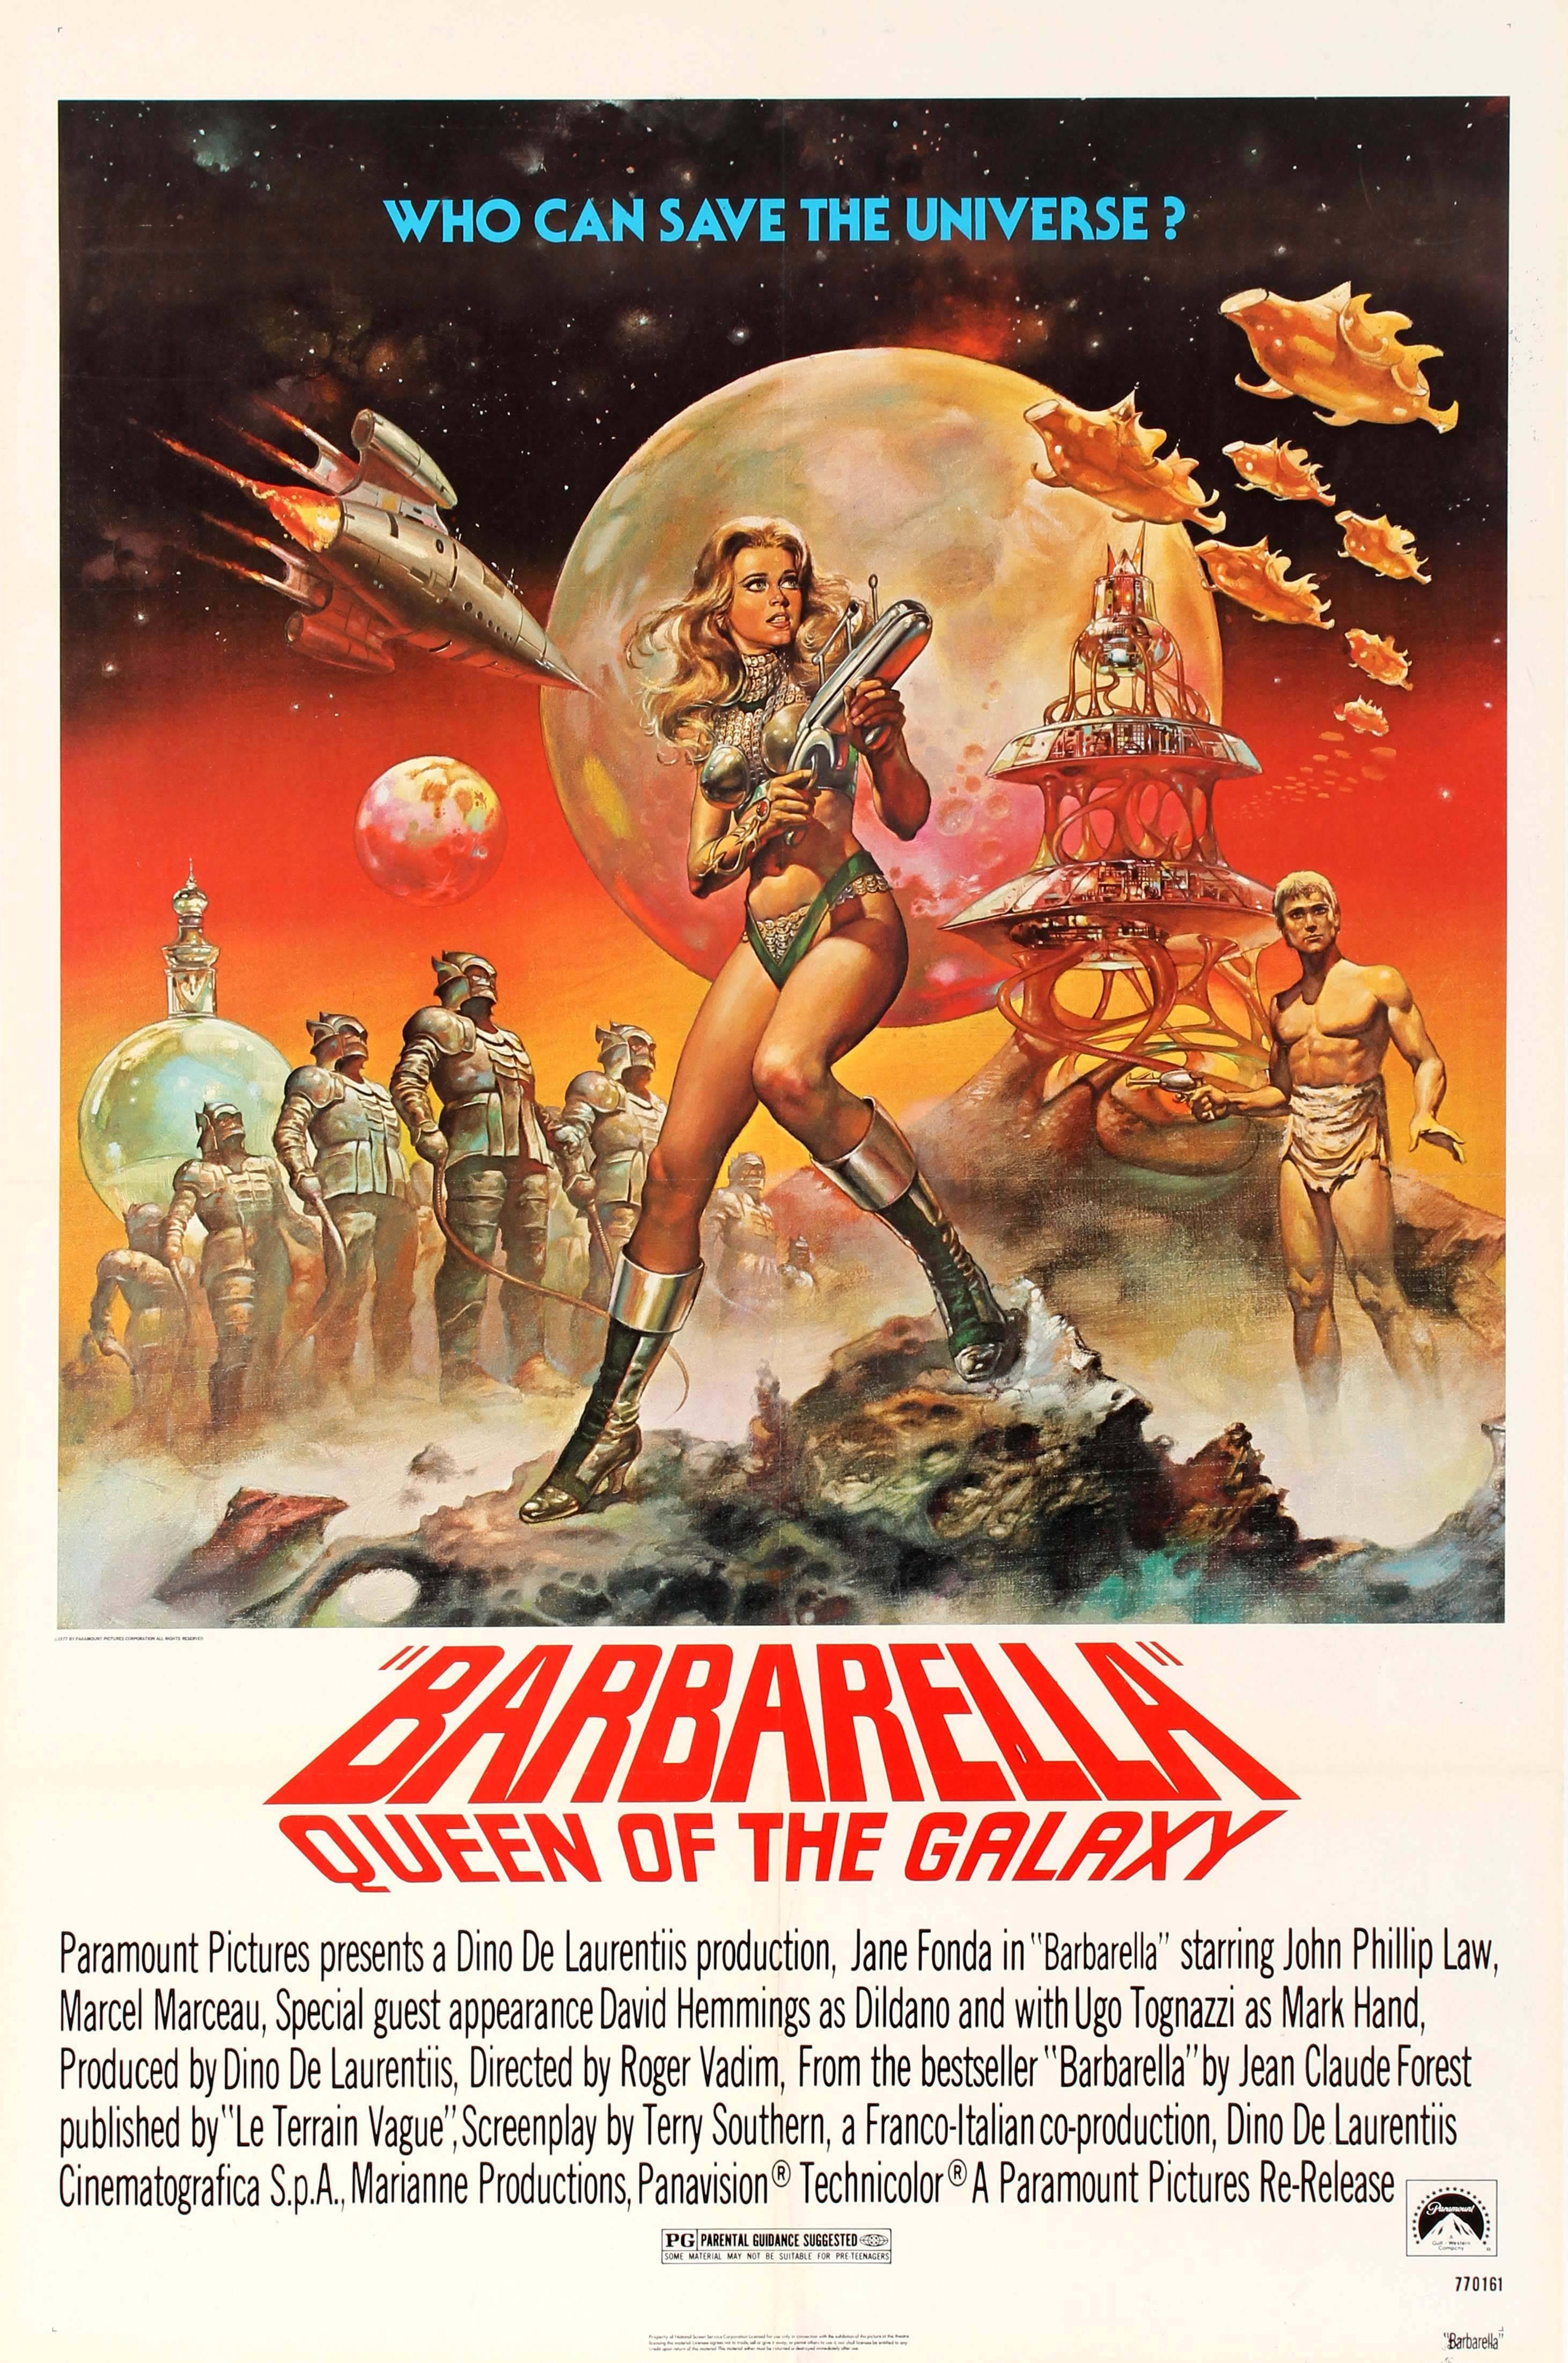 Boris Vallejo Print - Original Barbarella Queen Of The Galaxy Movie Poster (1977 Release) - Jane Fonda